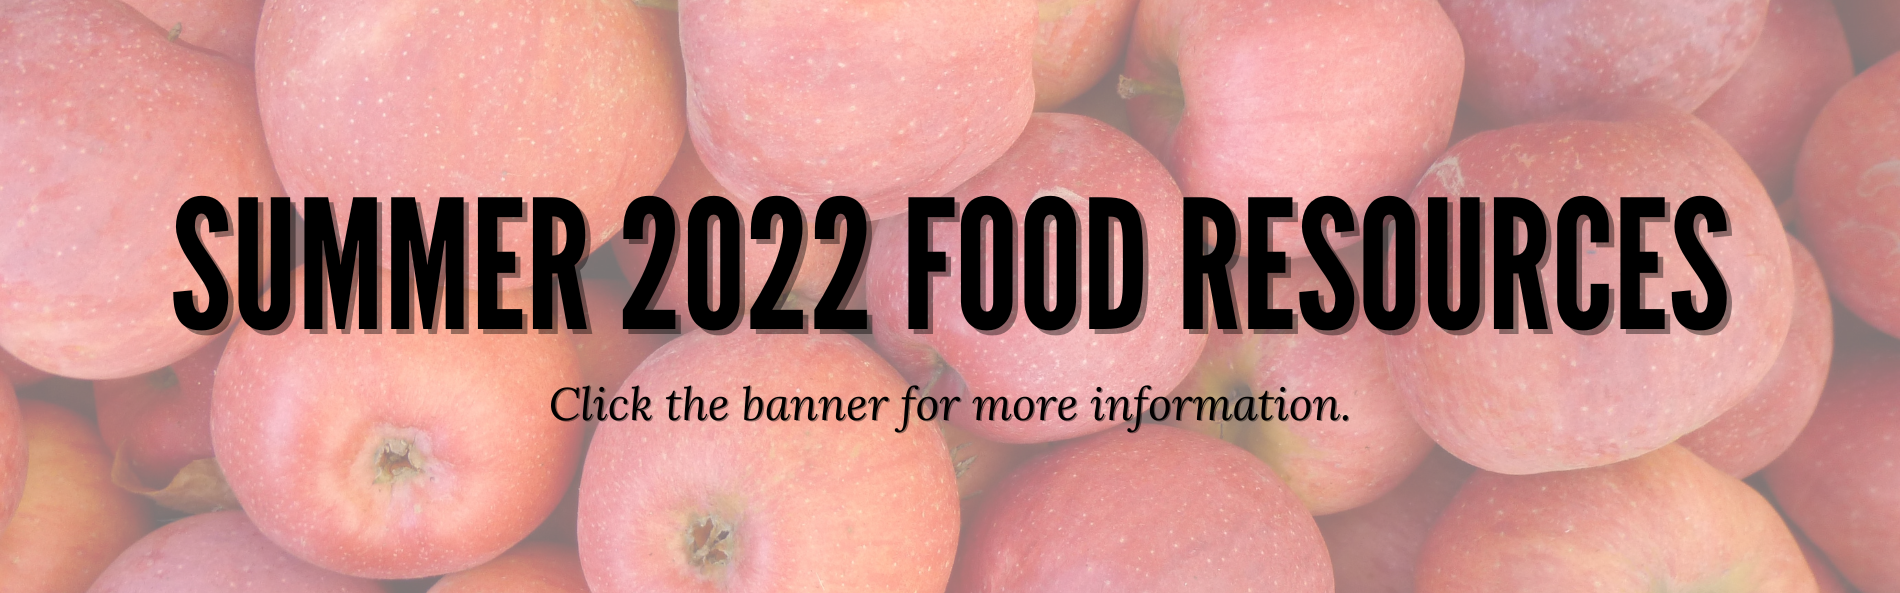 Summer 2022 Food Resources